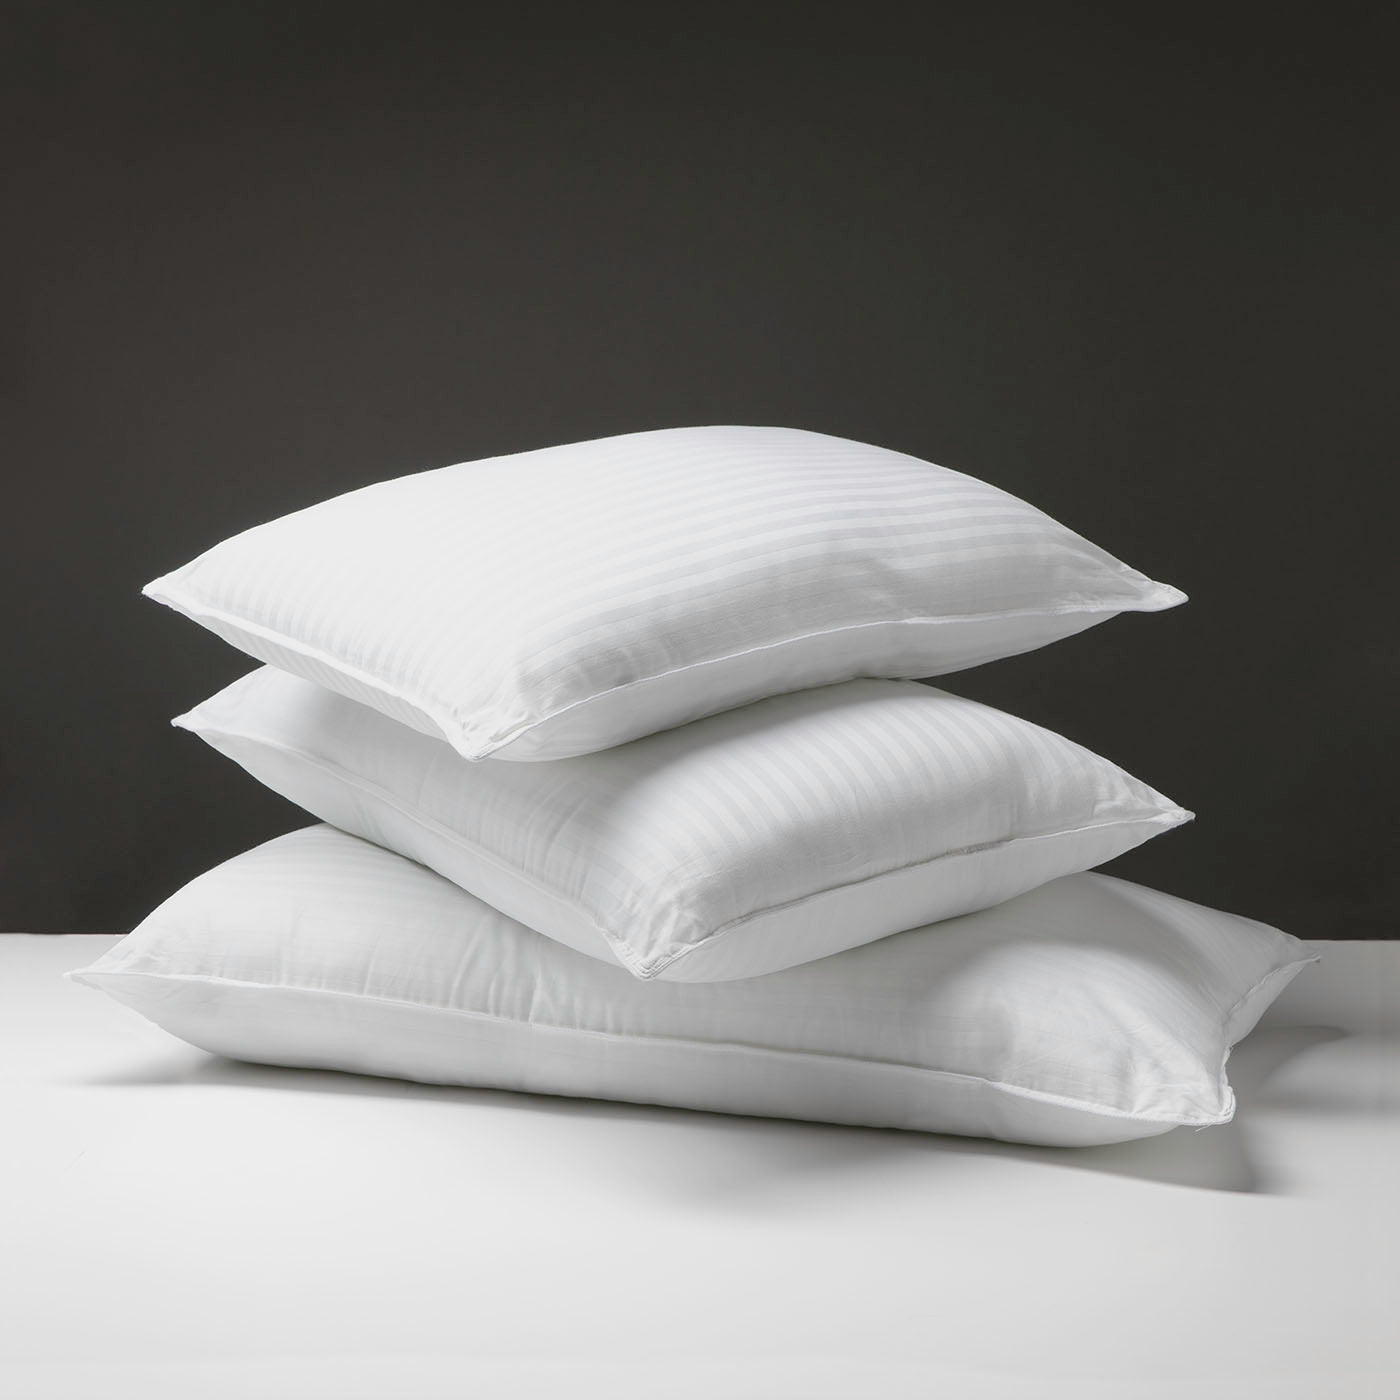 Sobel Westex Hotel Dolce Notte II Medium Pillow - Standard size, Down-like Feel, Medium-Firm Support, 100% Cotton Casing, King